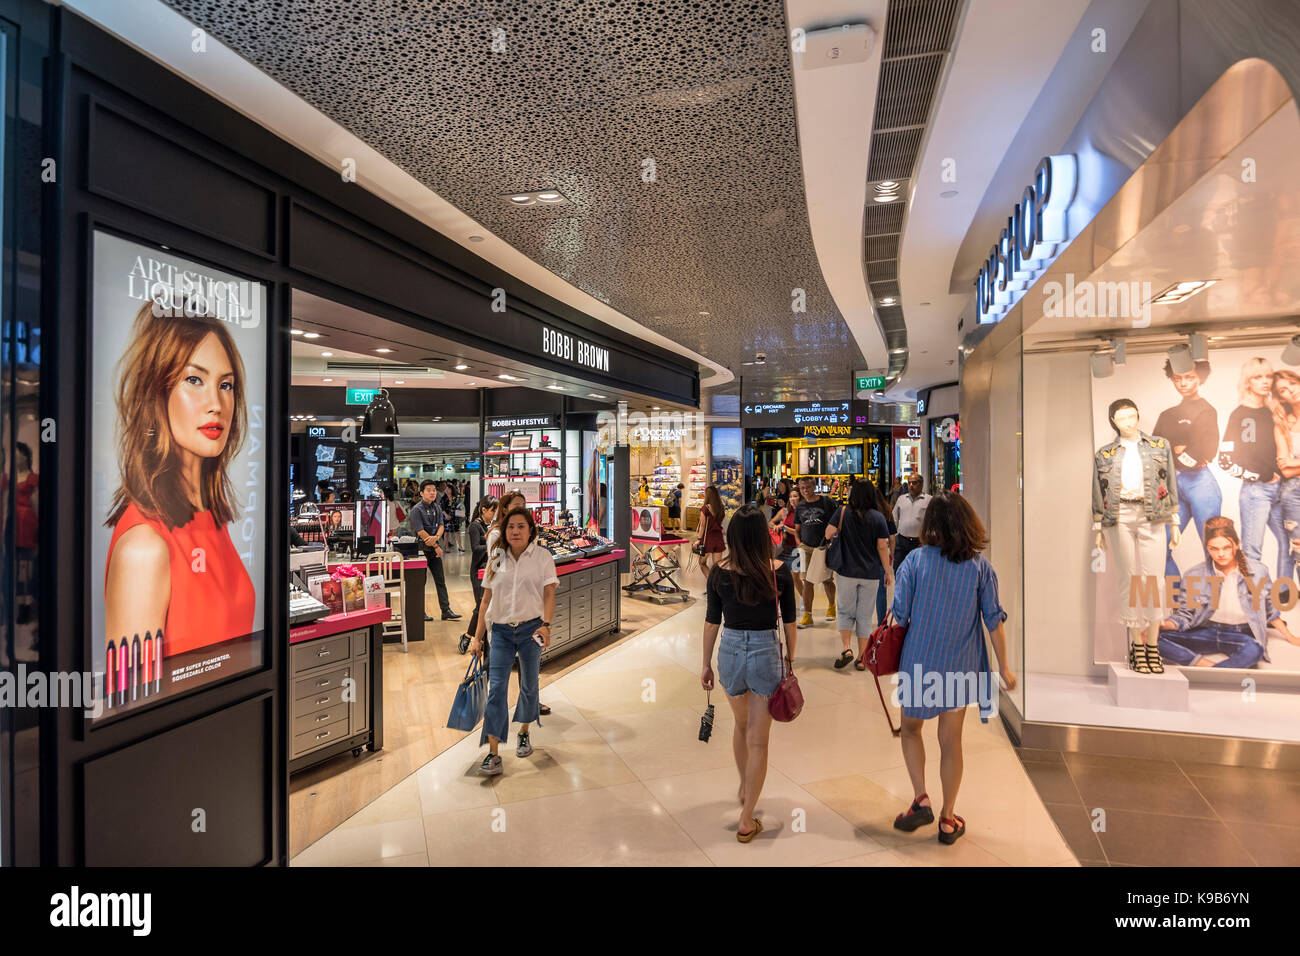 Bobbi Brown Cosmetics Store, Ion Orchard Shopping Mall, Singapore Stock Photo